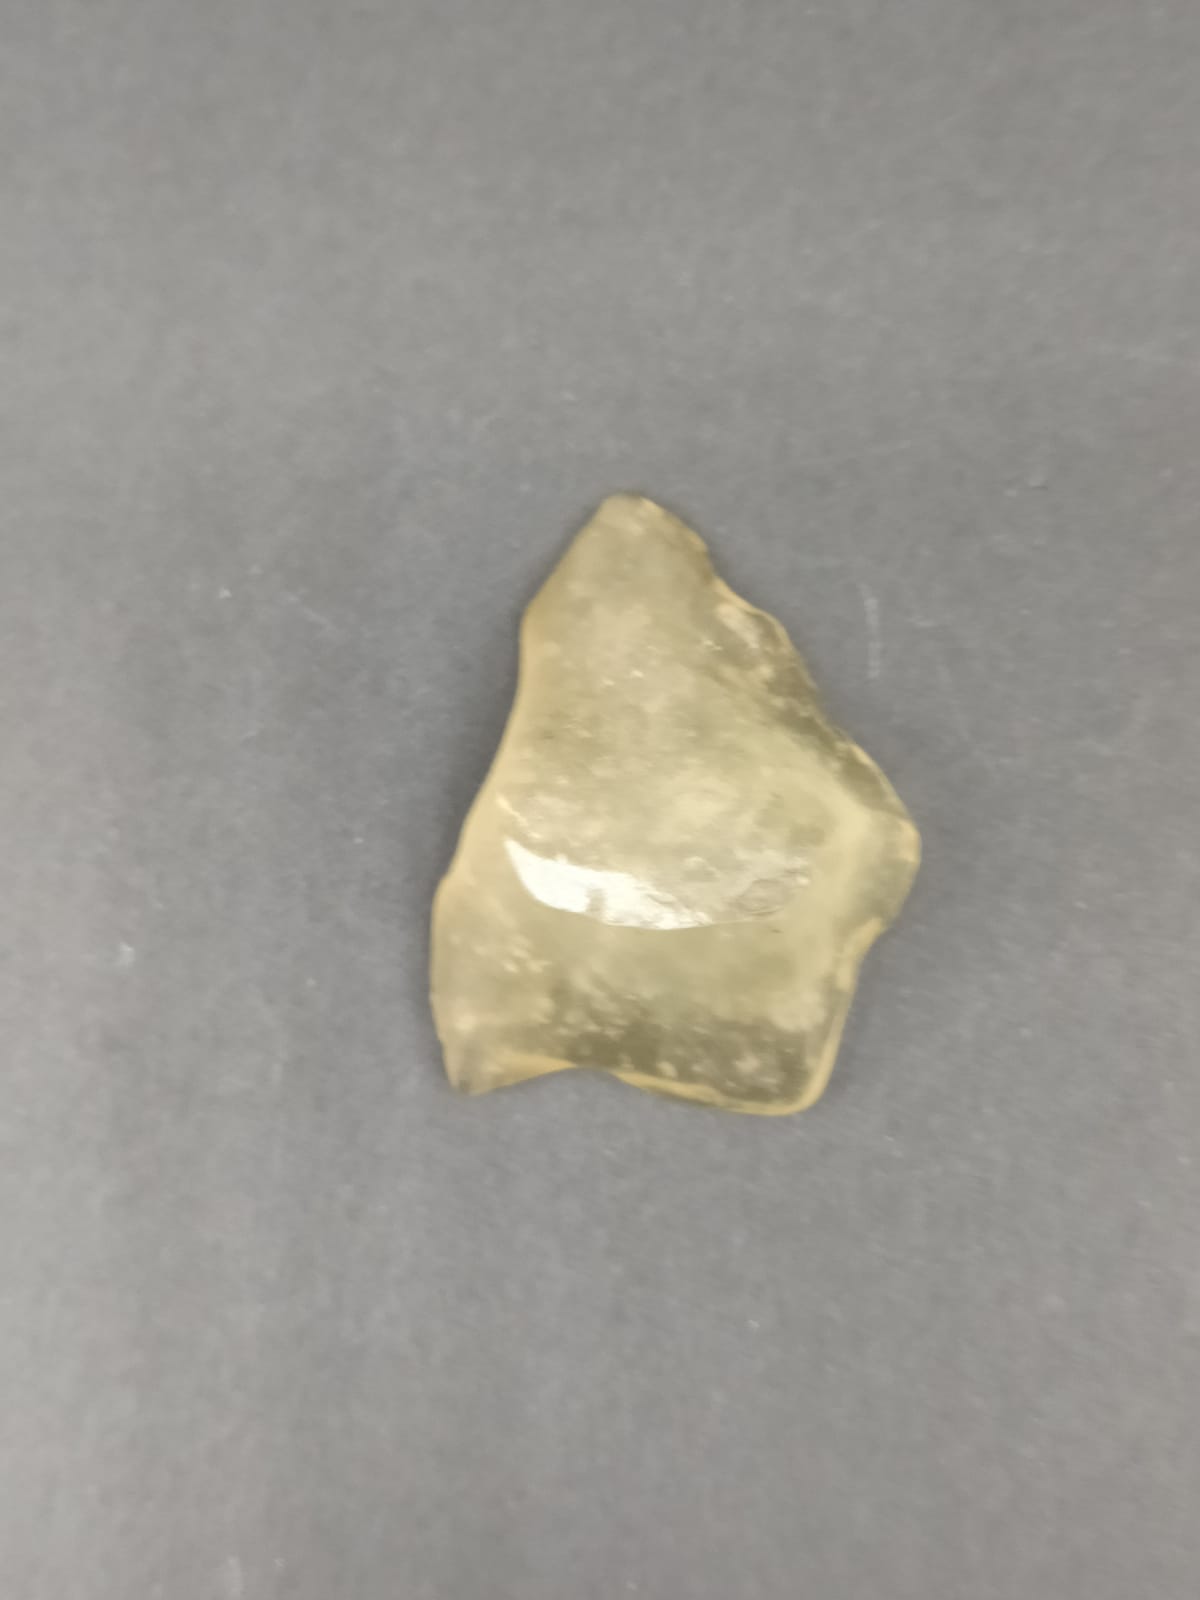 Authentic Libyan Desert Glass Q1 High Grade Golden Ray 37.58 Grams Crystal Wellness